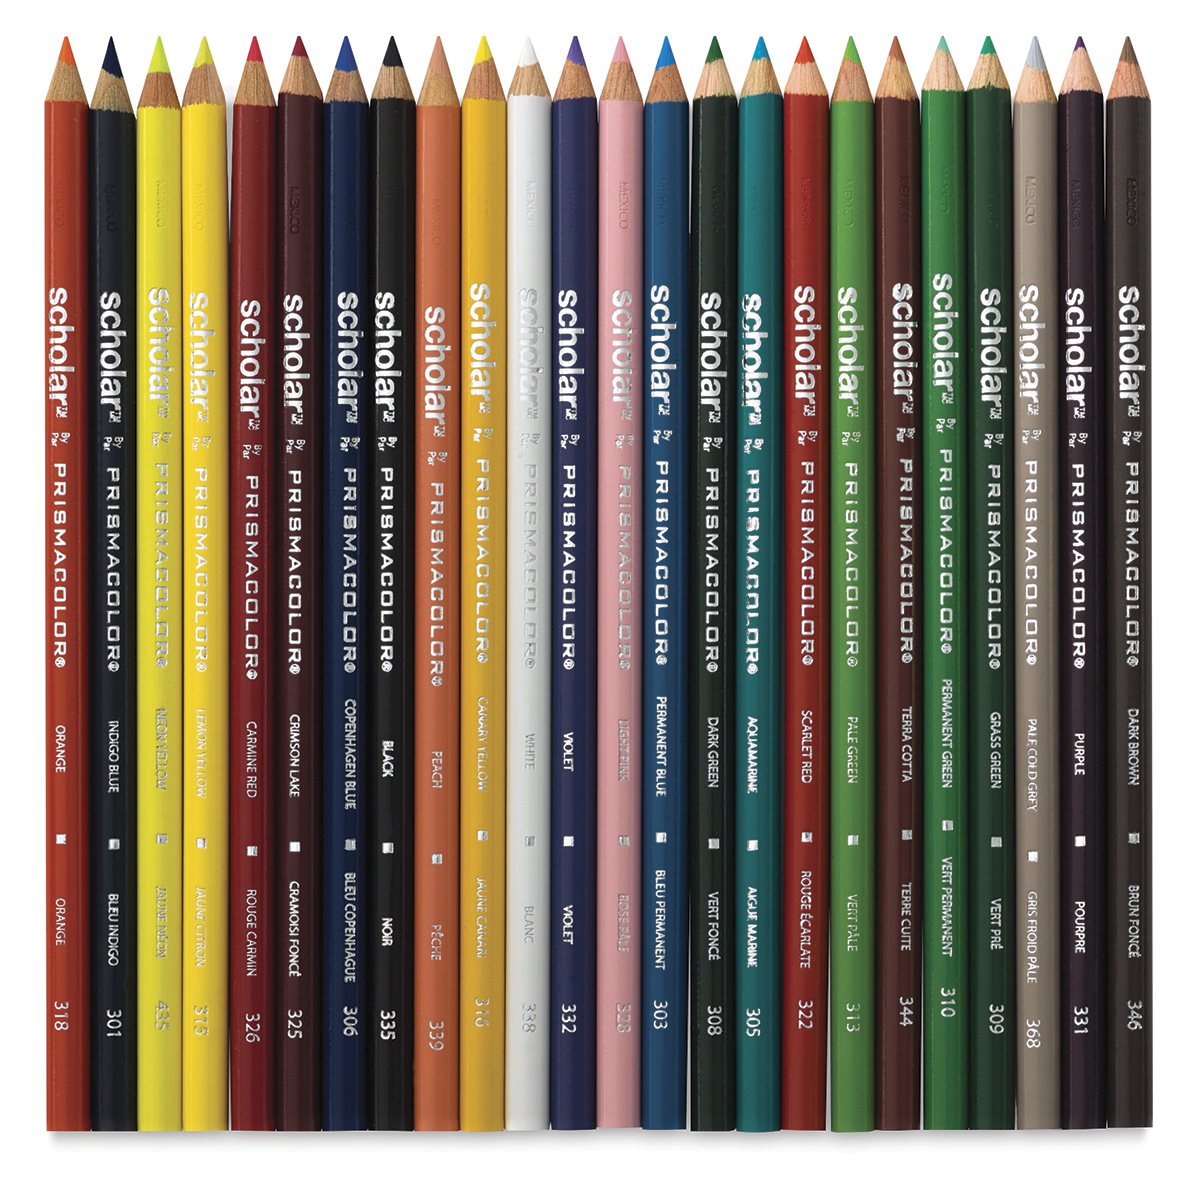 Scholar™ Colored Pencil Sets